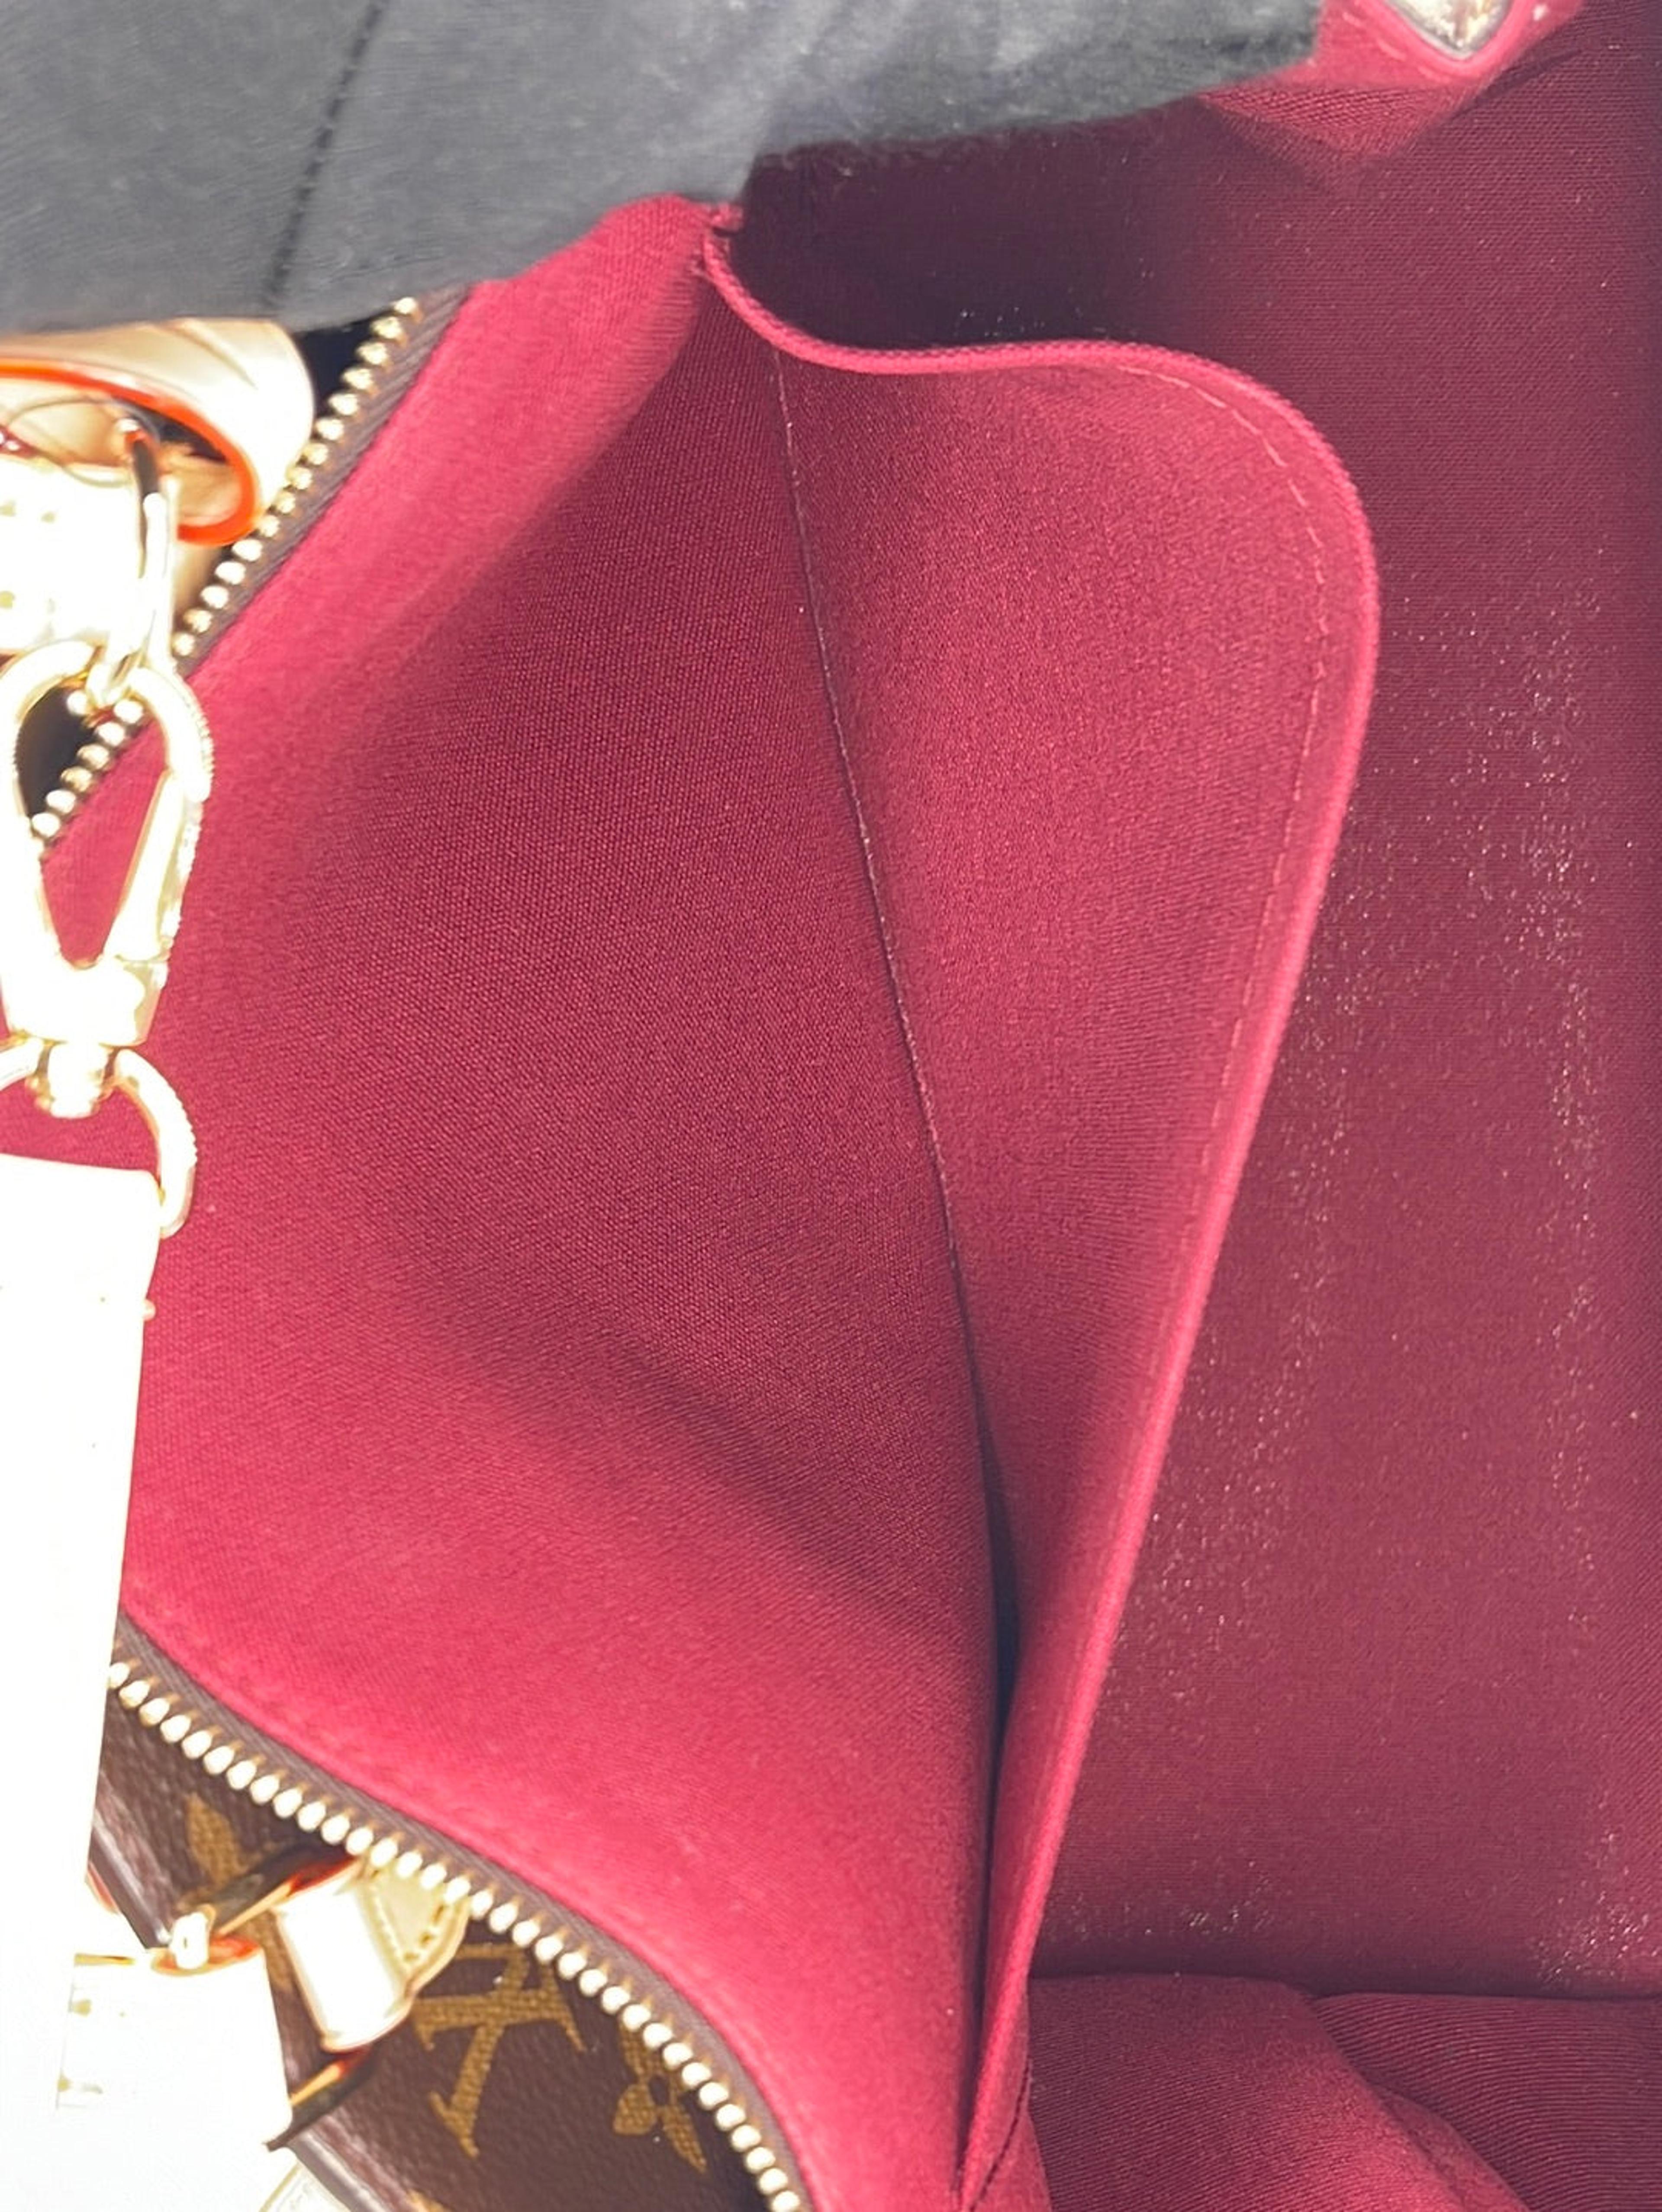 NTWRK - LIKE NEW Louis Vuitton Monogram Grand Palais Shoulder Bag with B